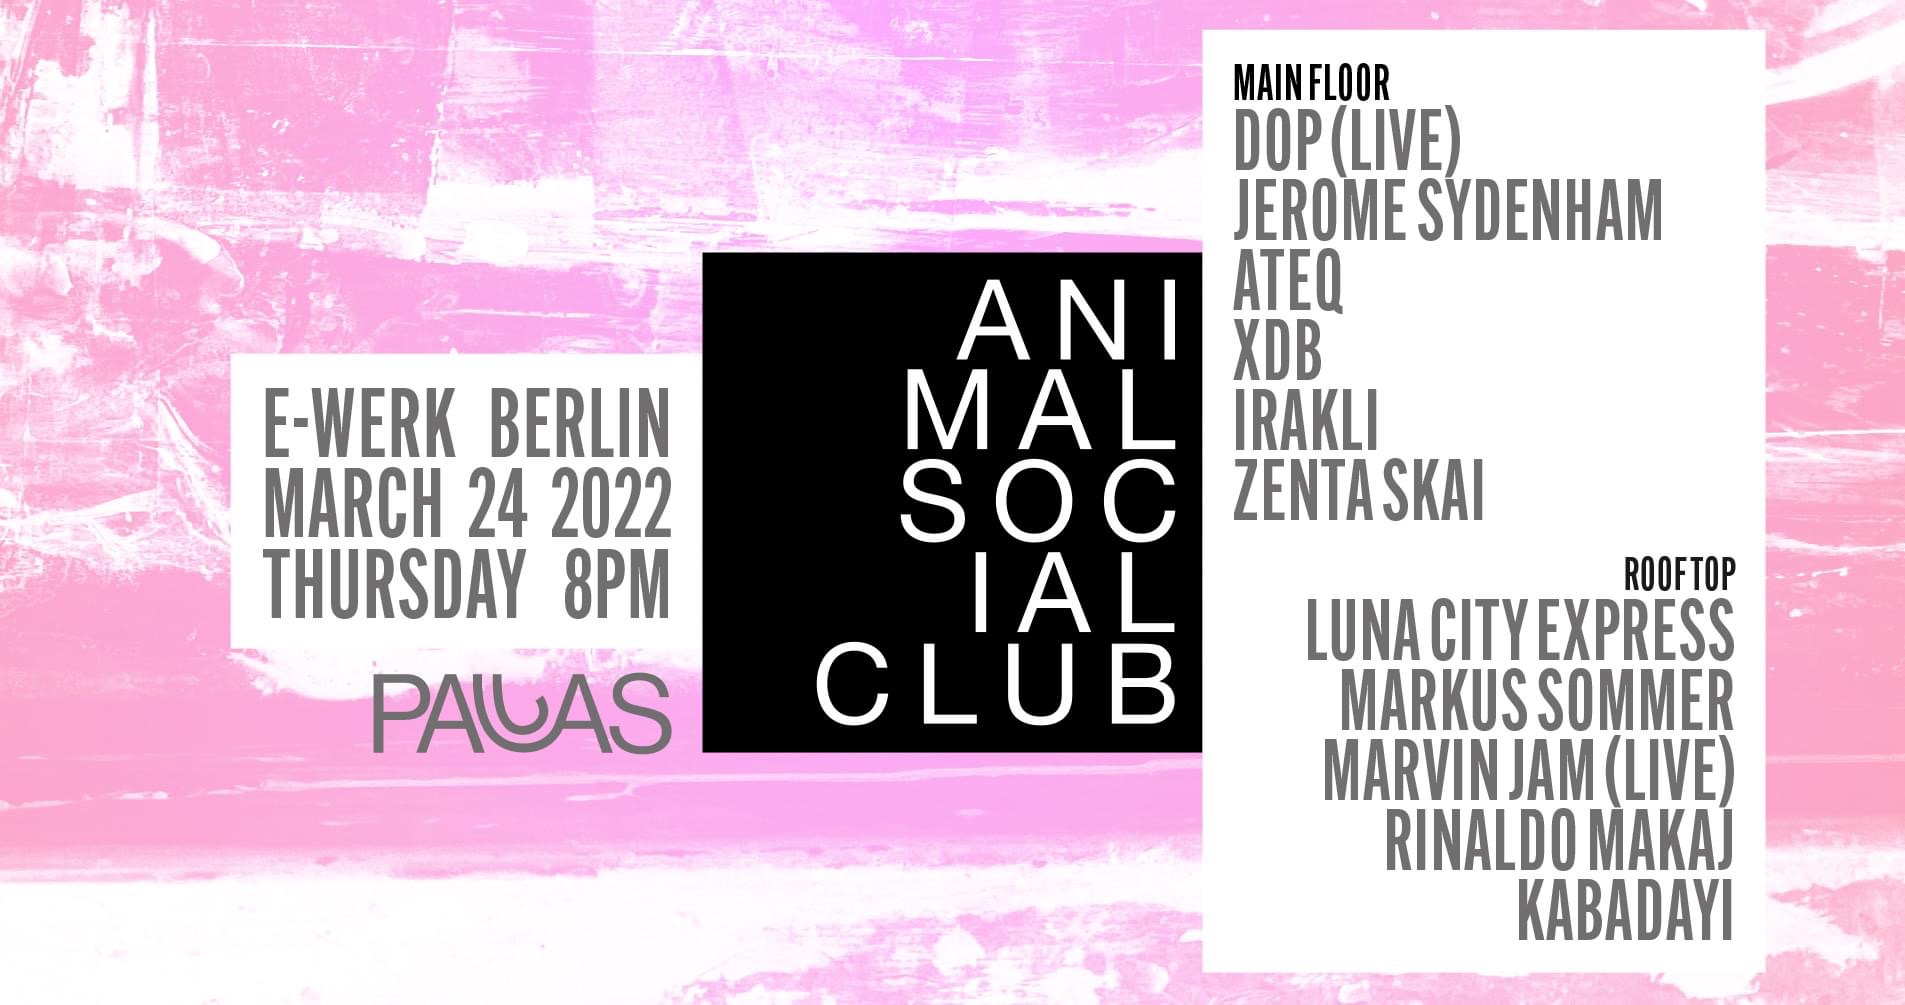 E-Werk am : Animal Social Club in Berlin